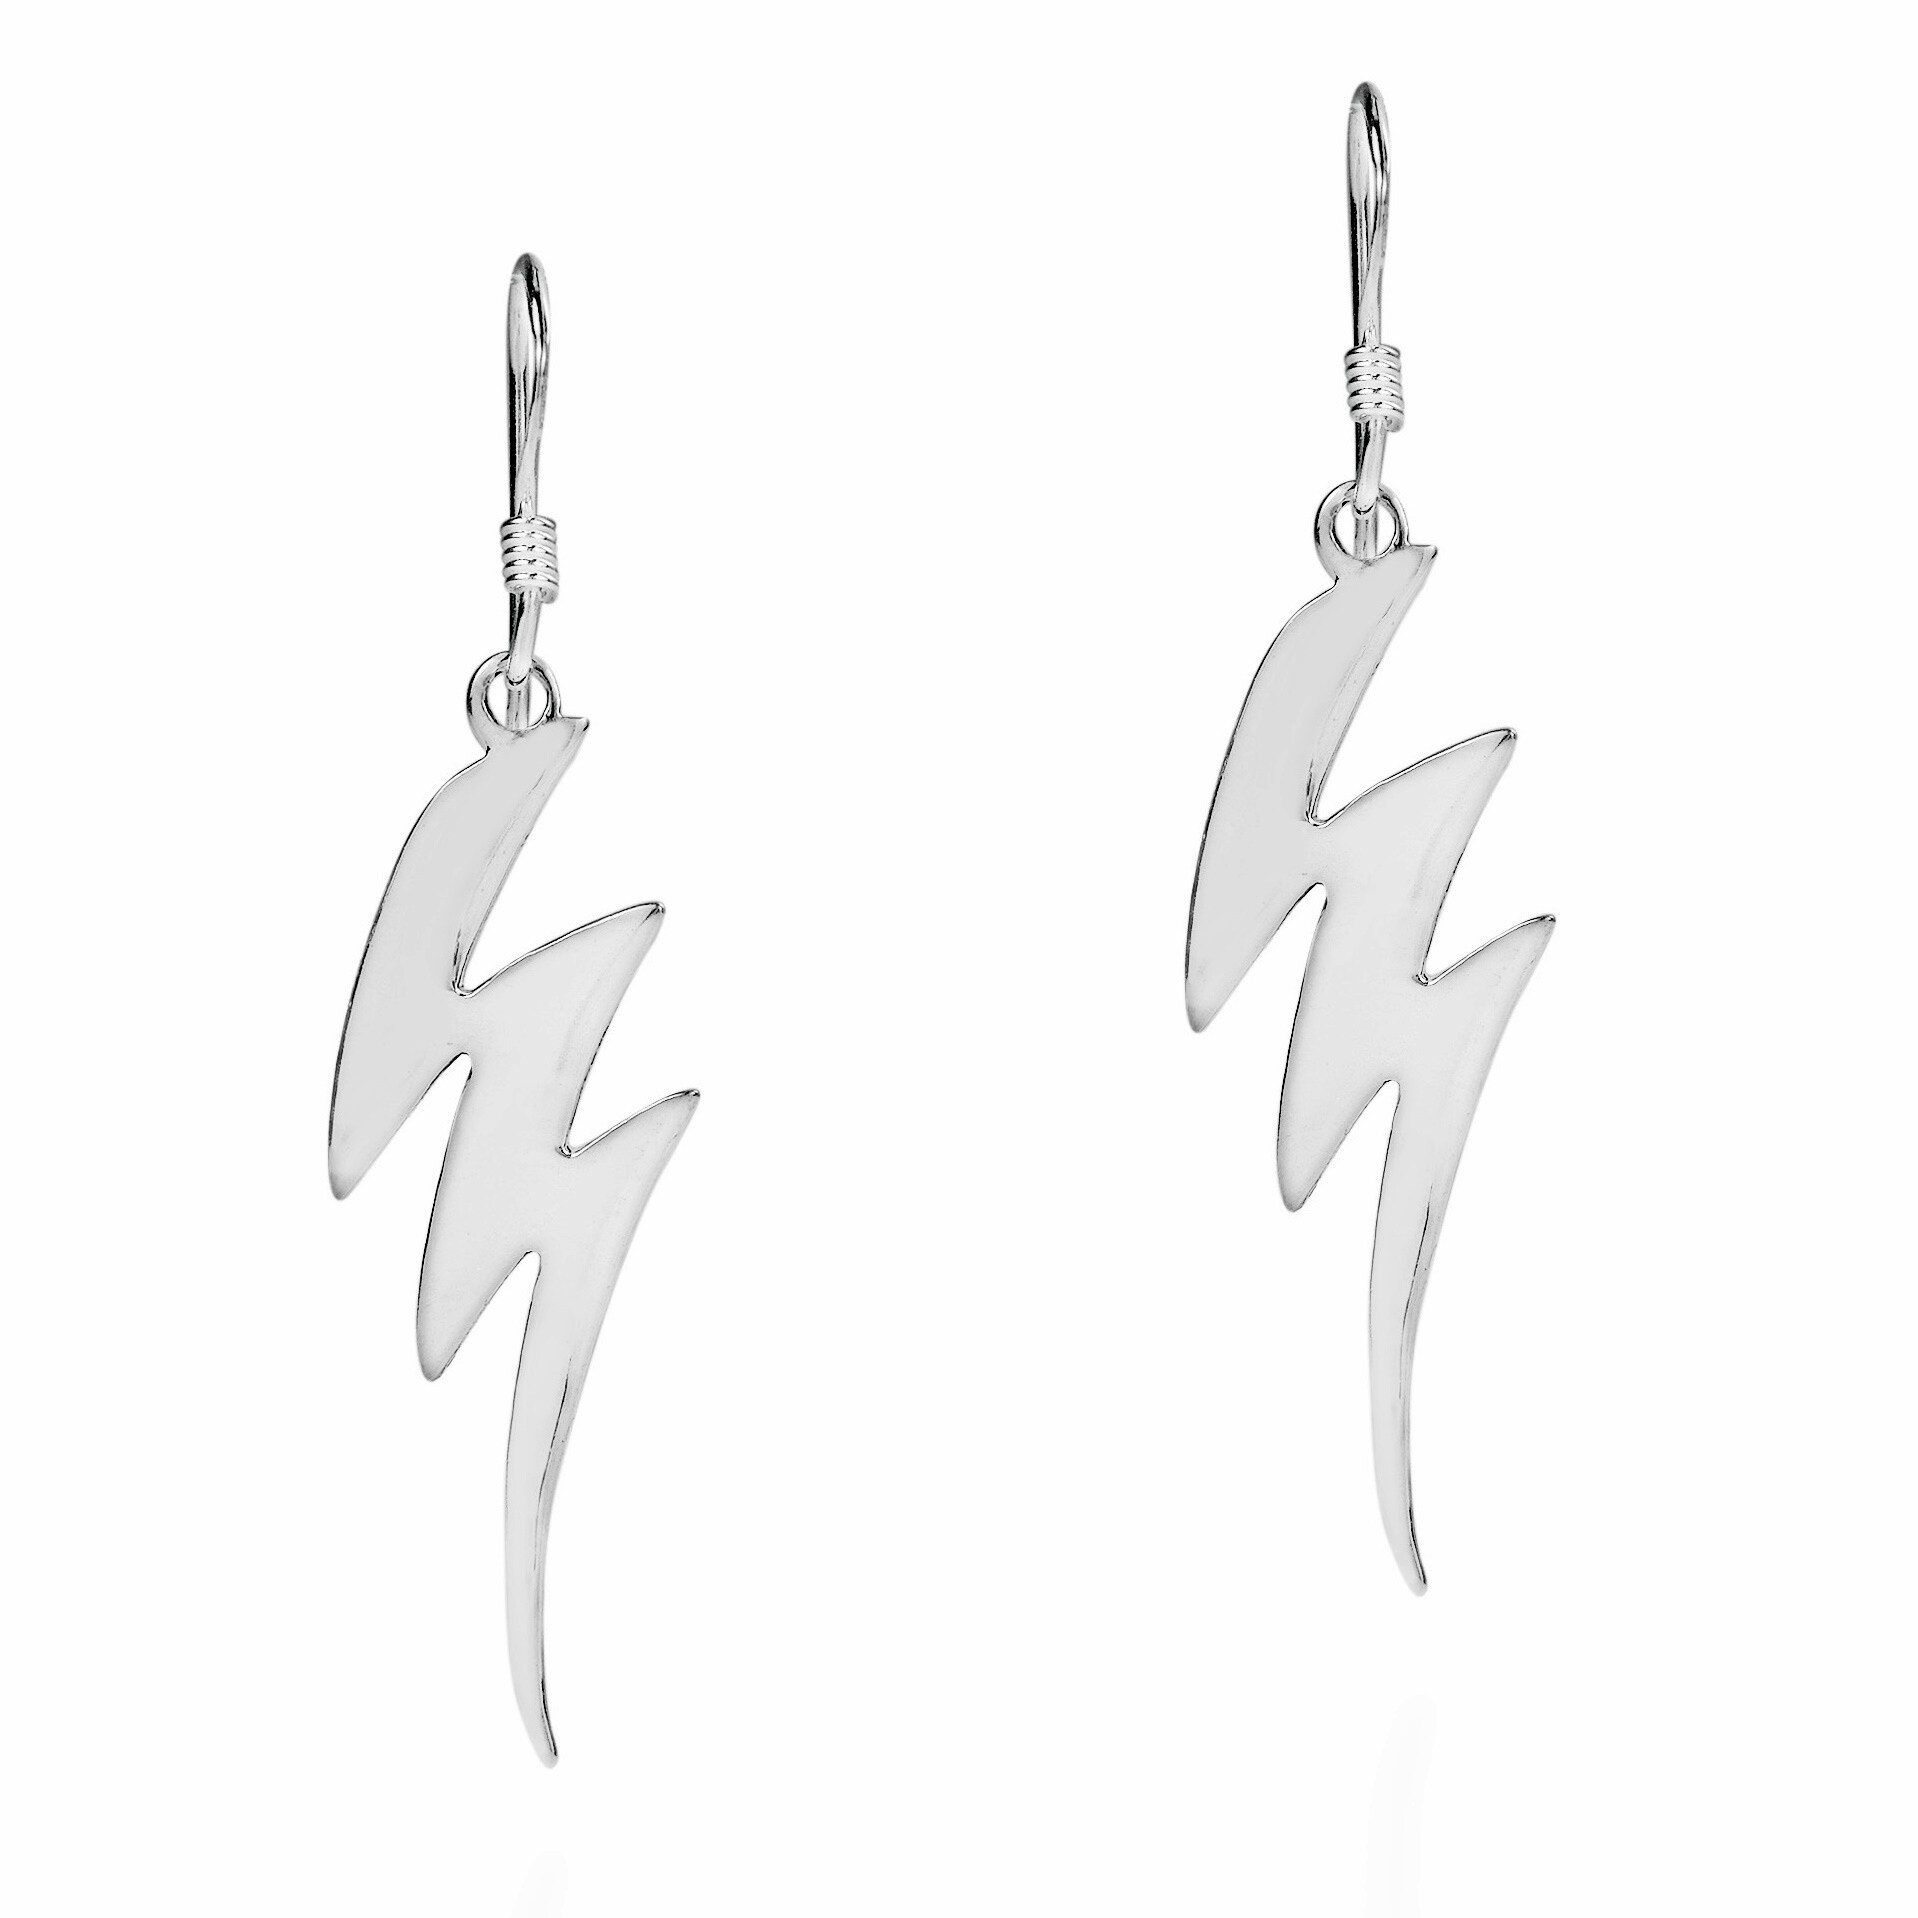 Handmade Edgy Zigzag Lightning Bolts Silver Dangle Earrings (Thailand)